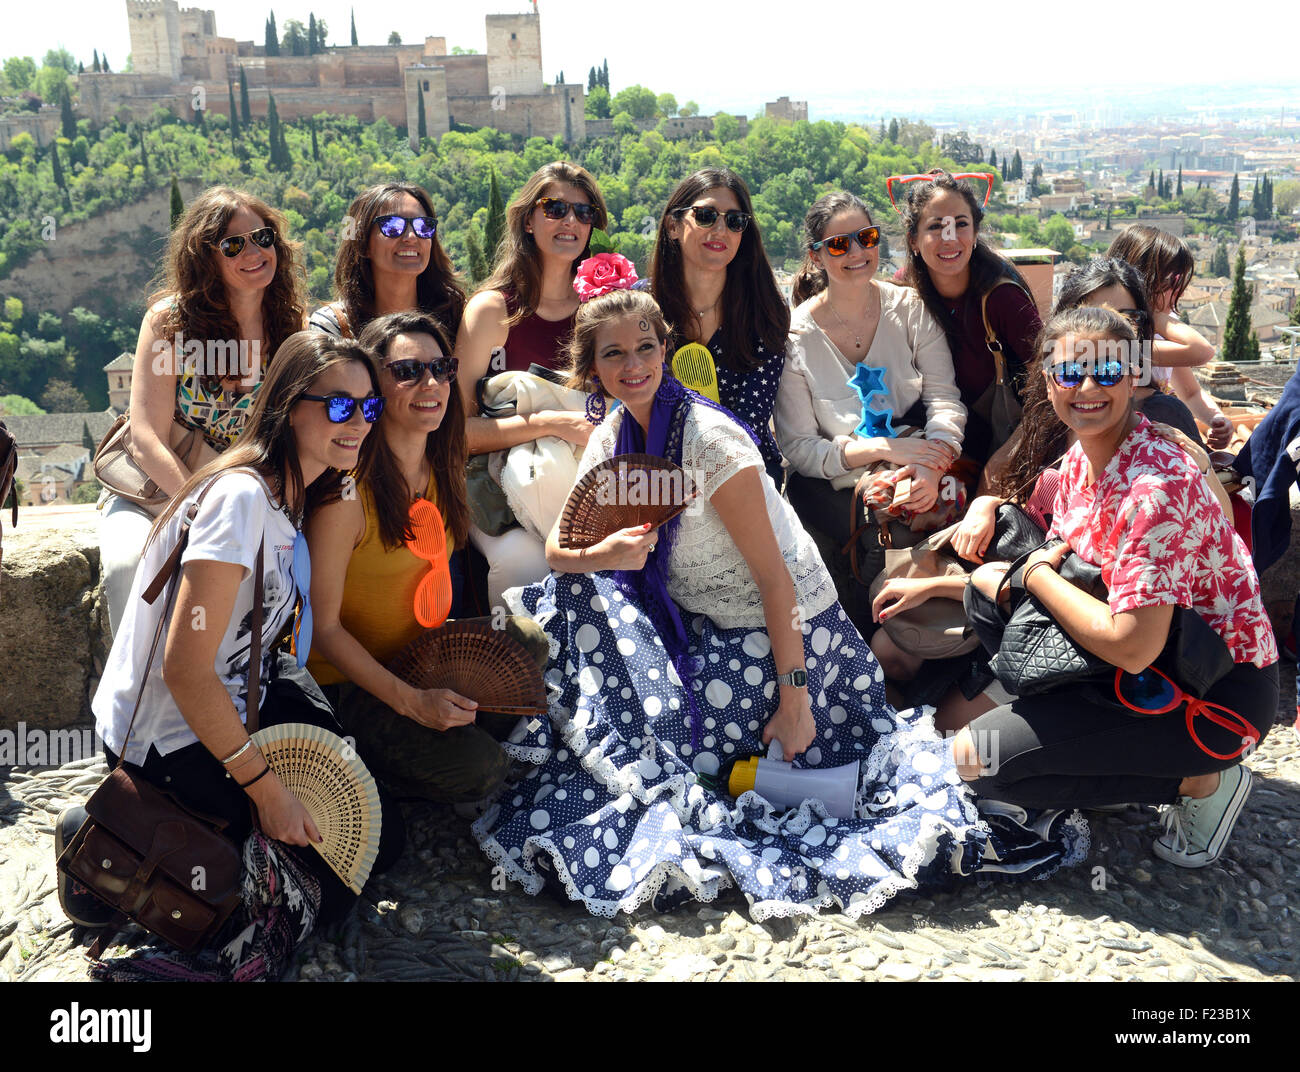 Women girls party fun weekend Granada Spain spanish partying female european Stock Photo